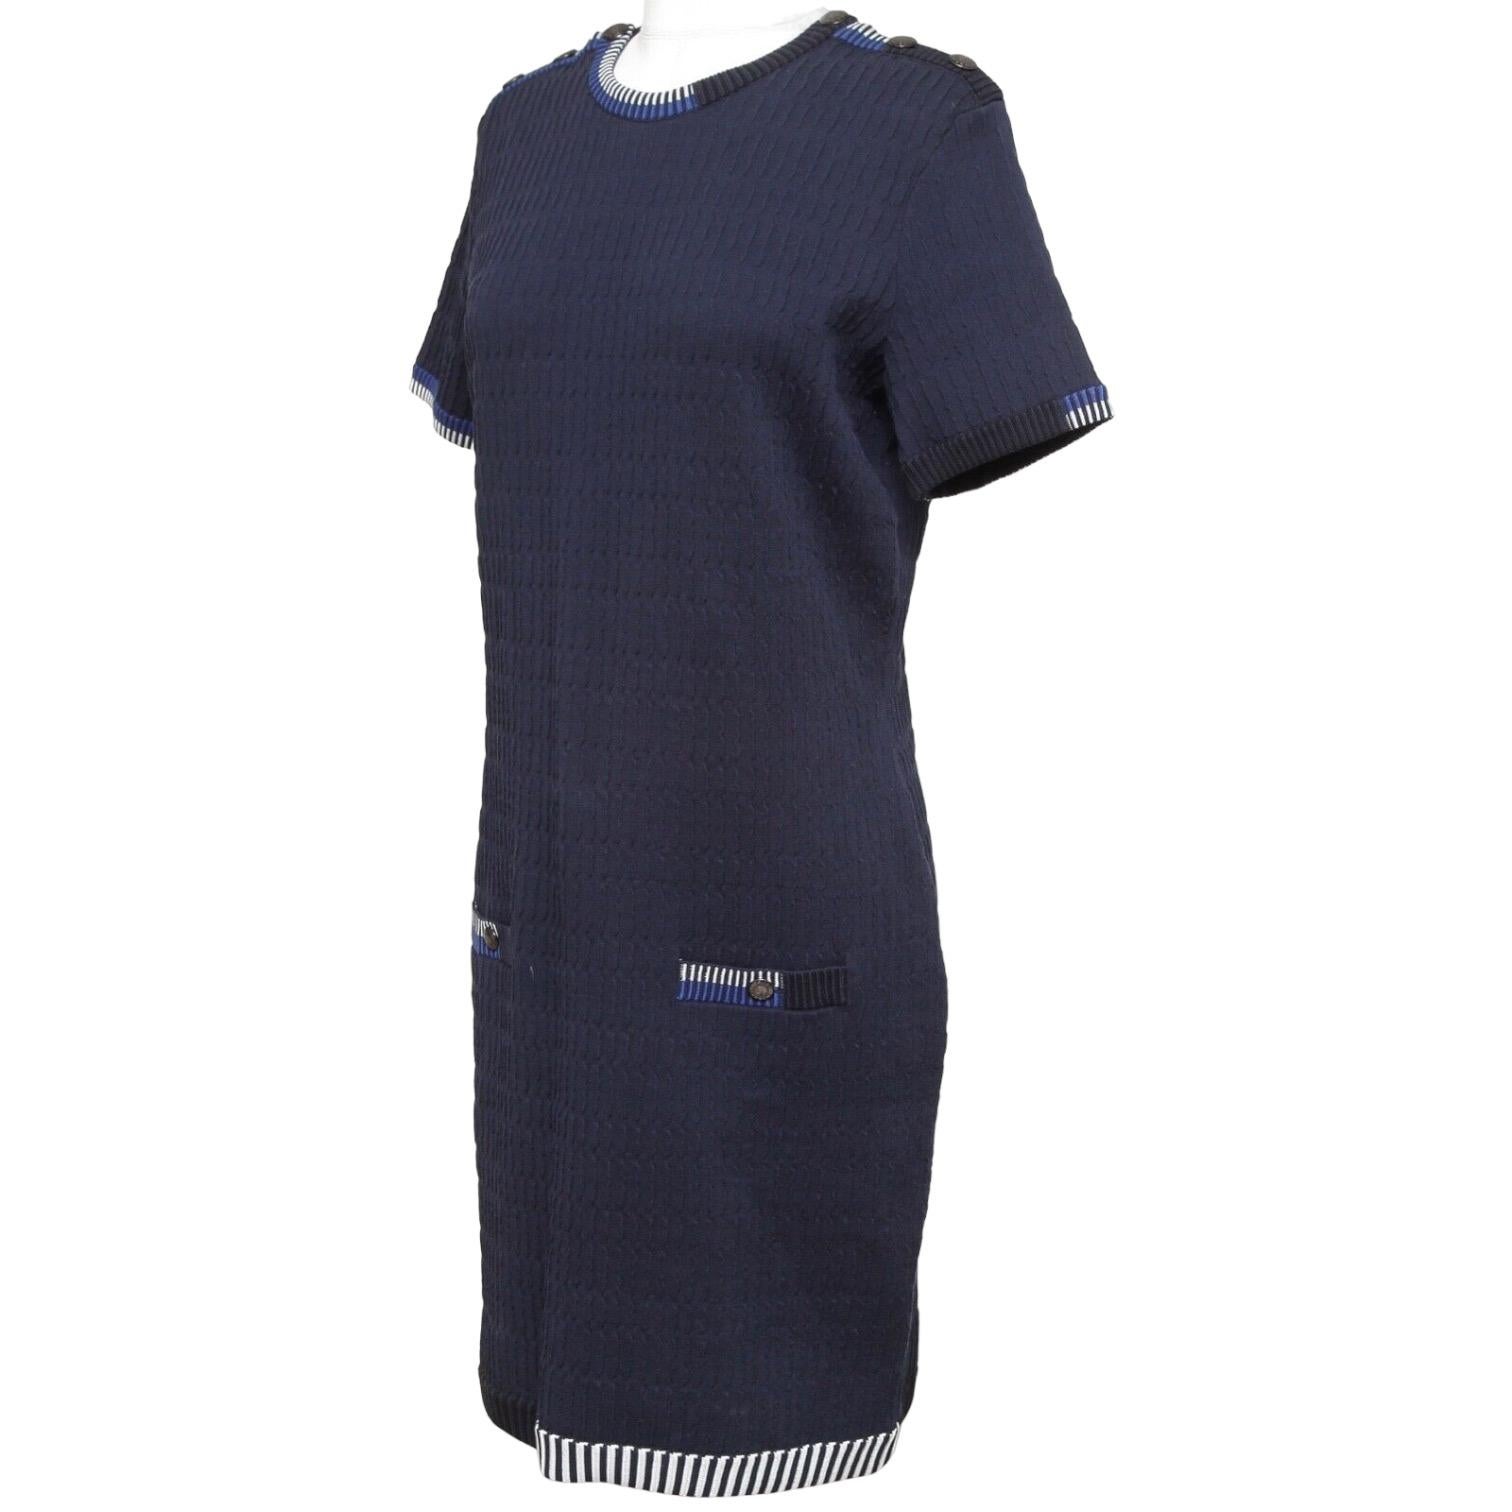 Black CHANEL Sweater Knit Dress Navy Blue White Short Sleeve Sz 42